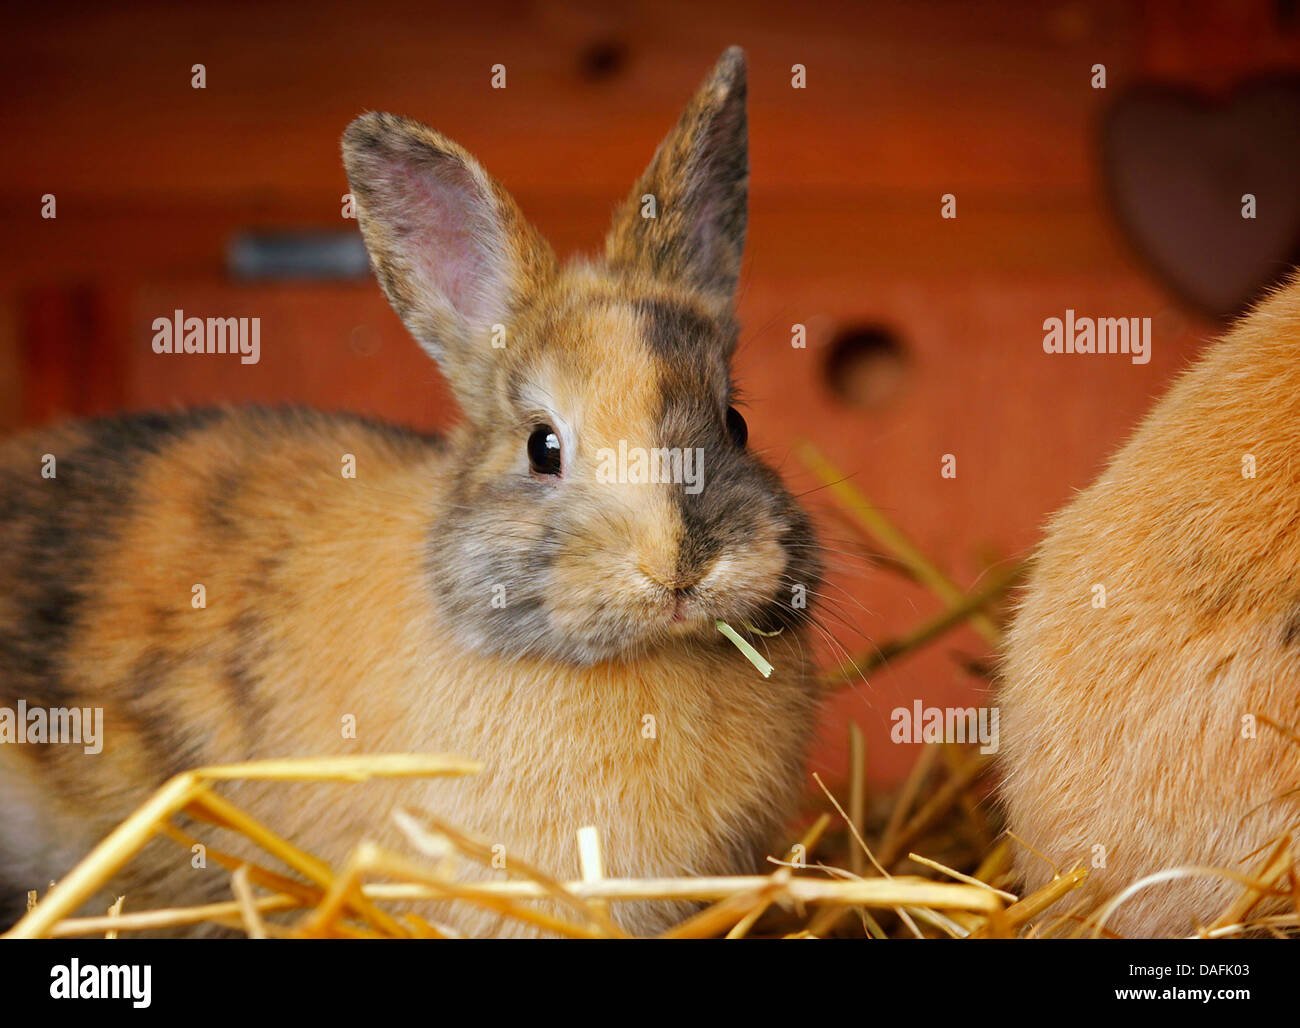 dwarf rabbit (Oryctolagus cuniculus f. domestica), young dwarf rabbit sitting in a rabbit hutch, Germany Stock Photo